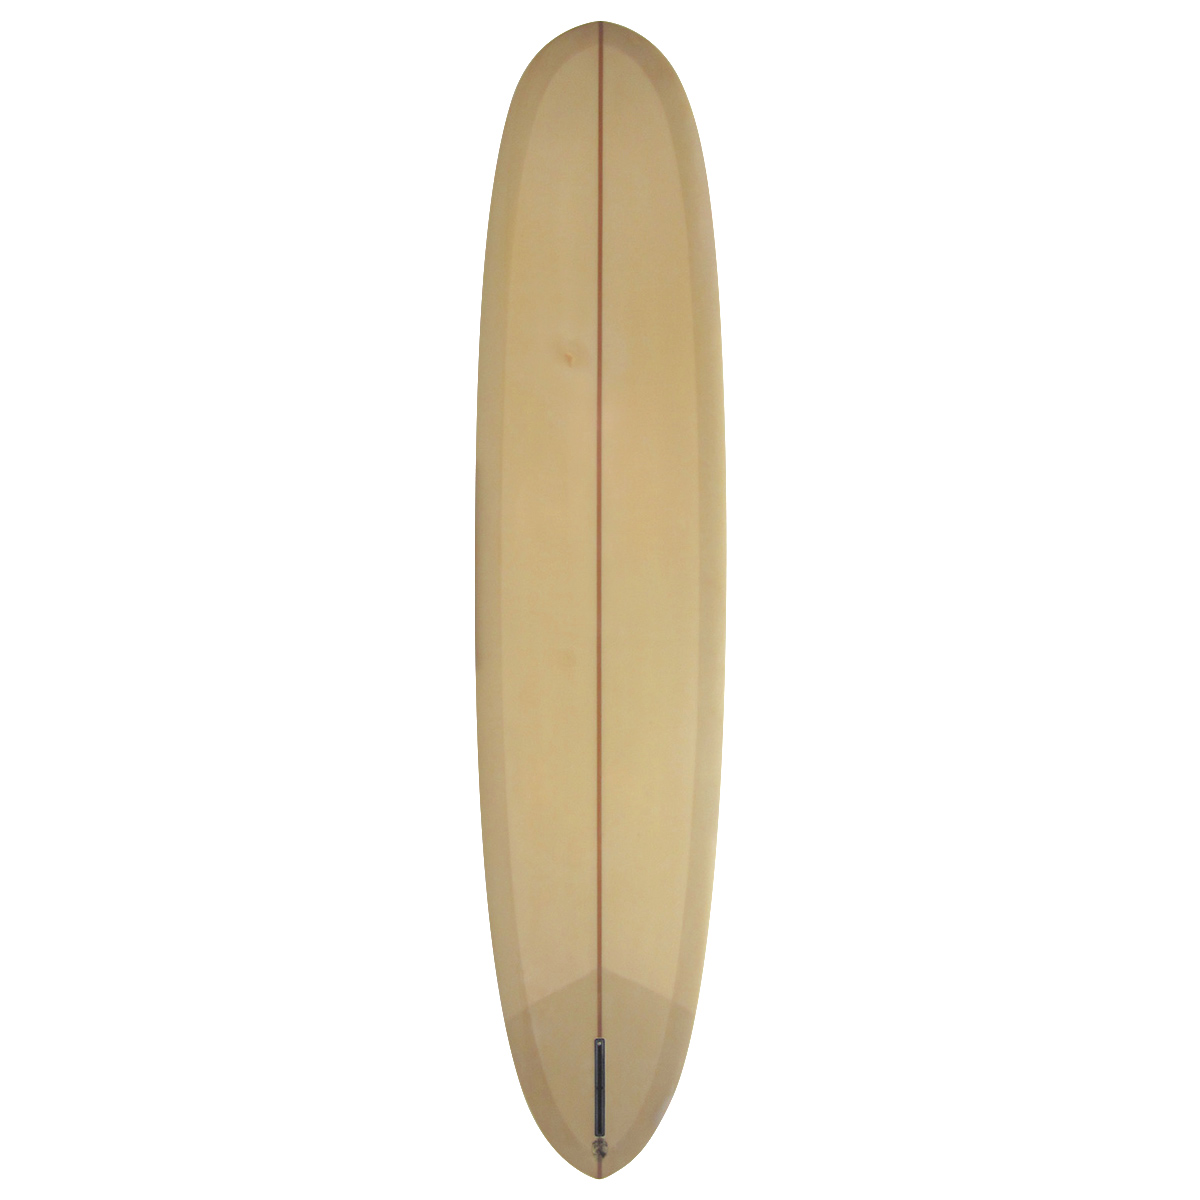 EC surfboards / Pintail noserider 9`4